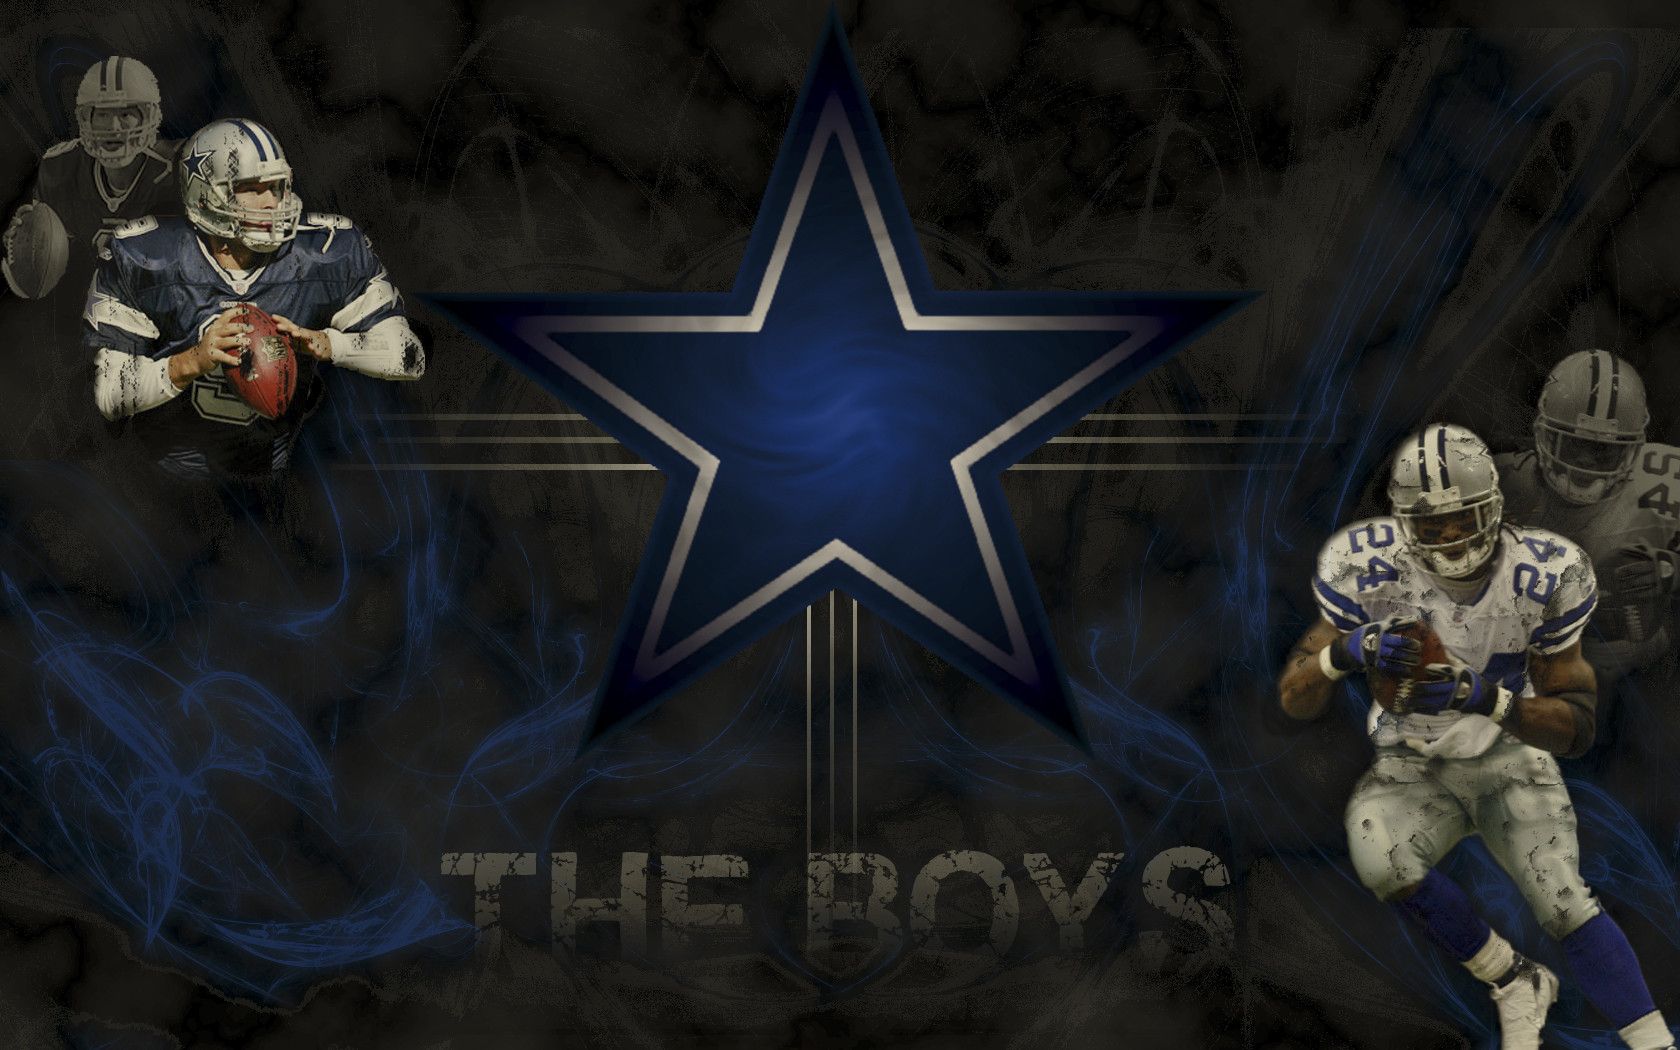 Dallas Cowboys Background For Desktop